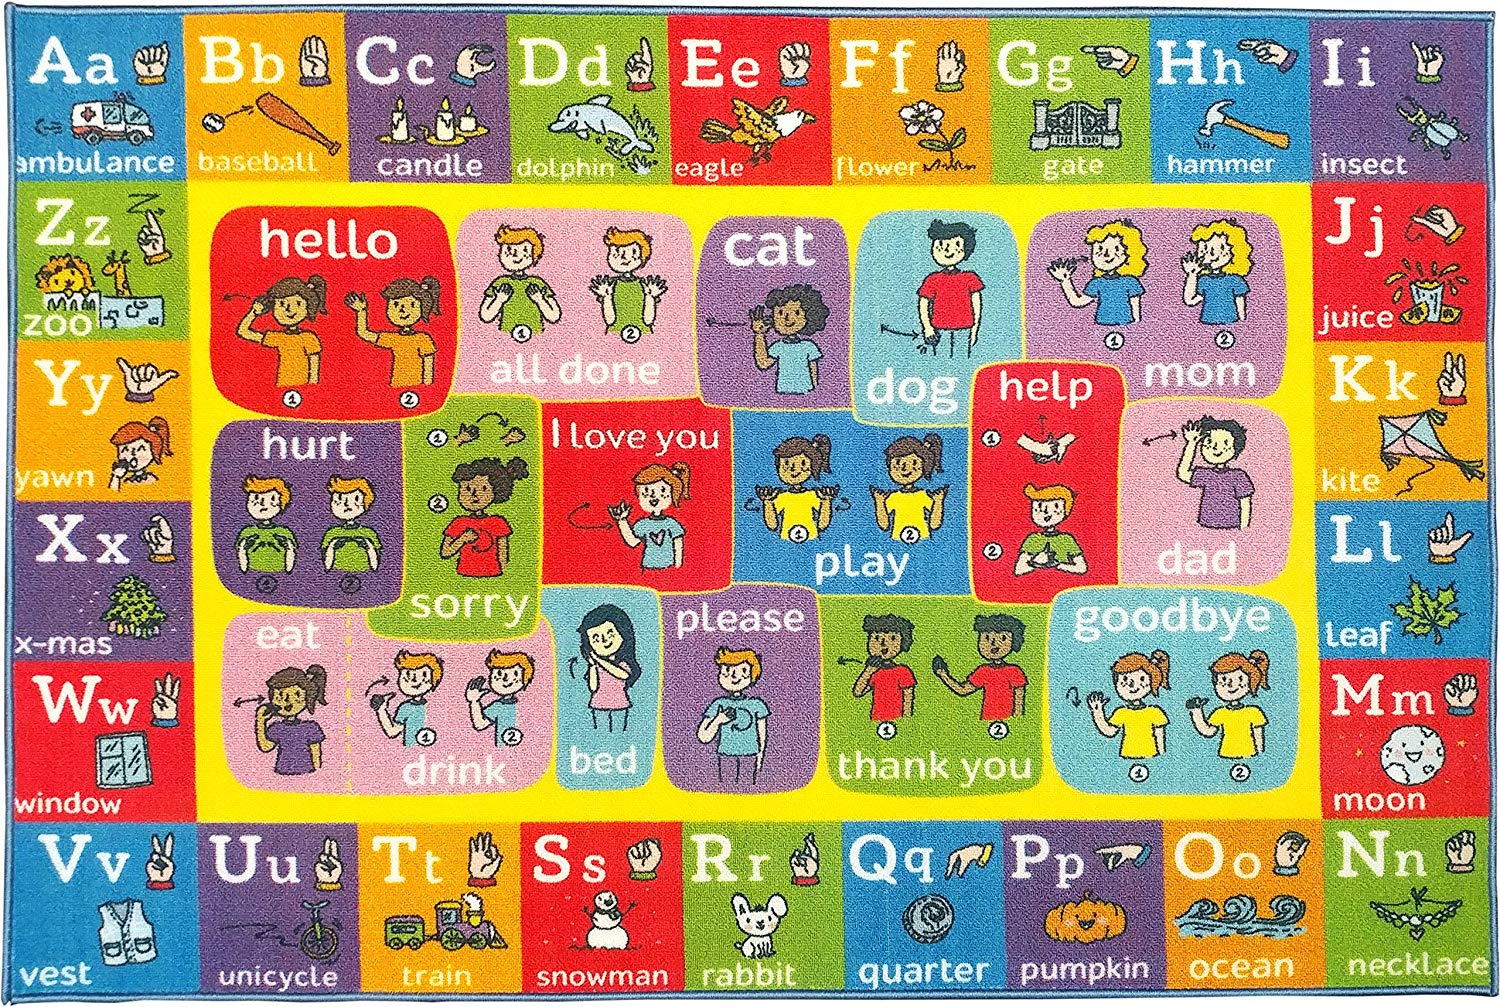 basic sign language words for kids